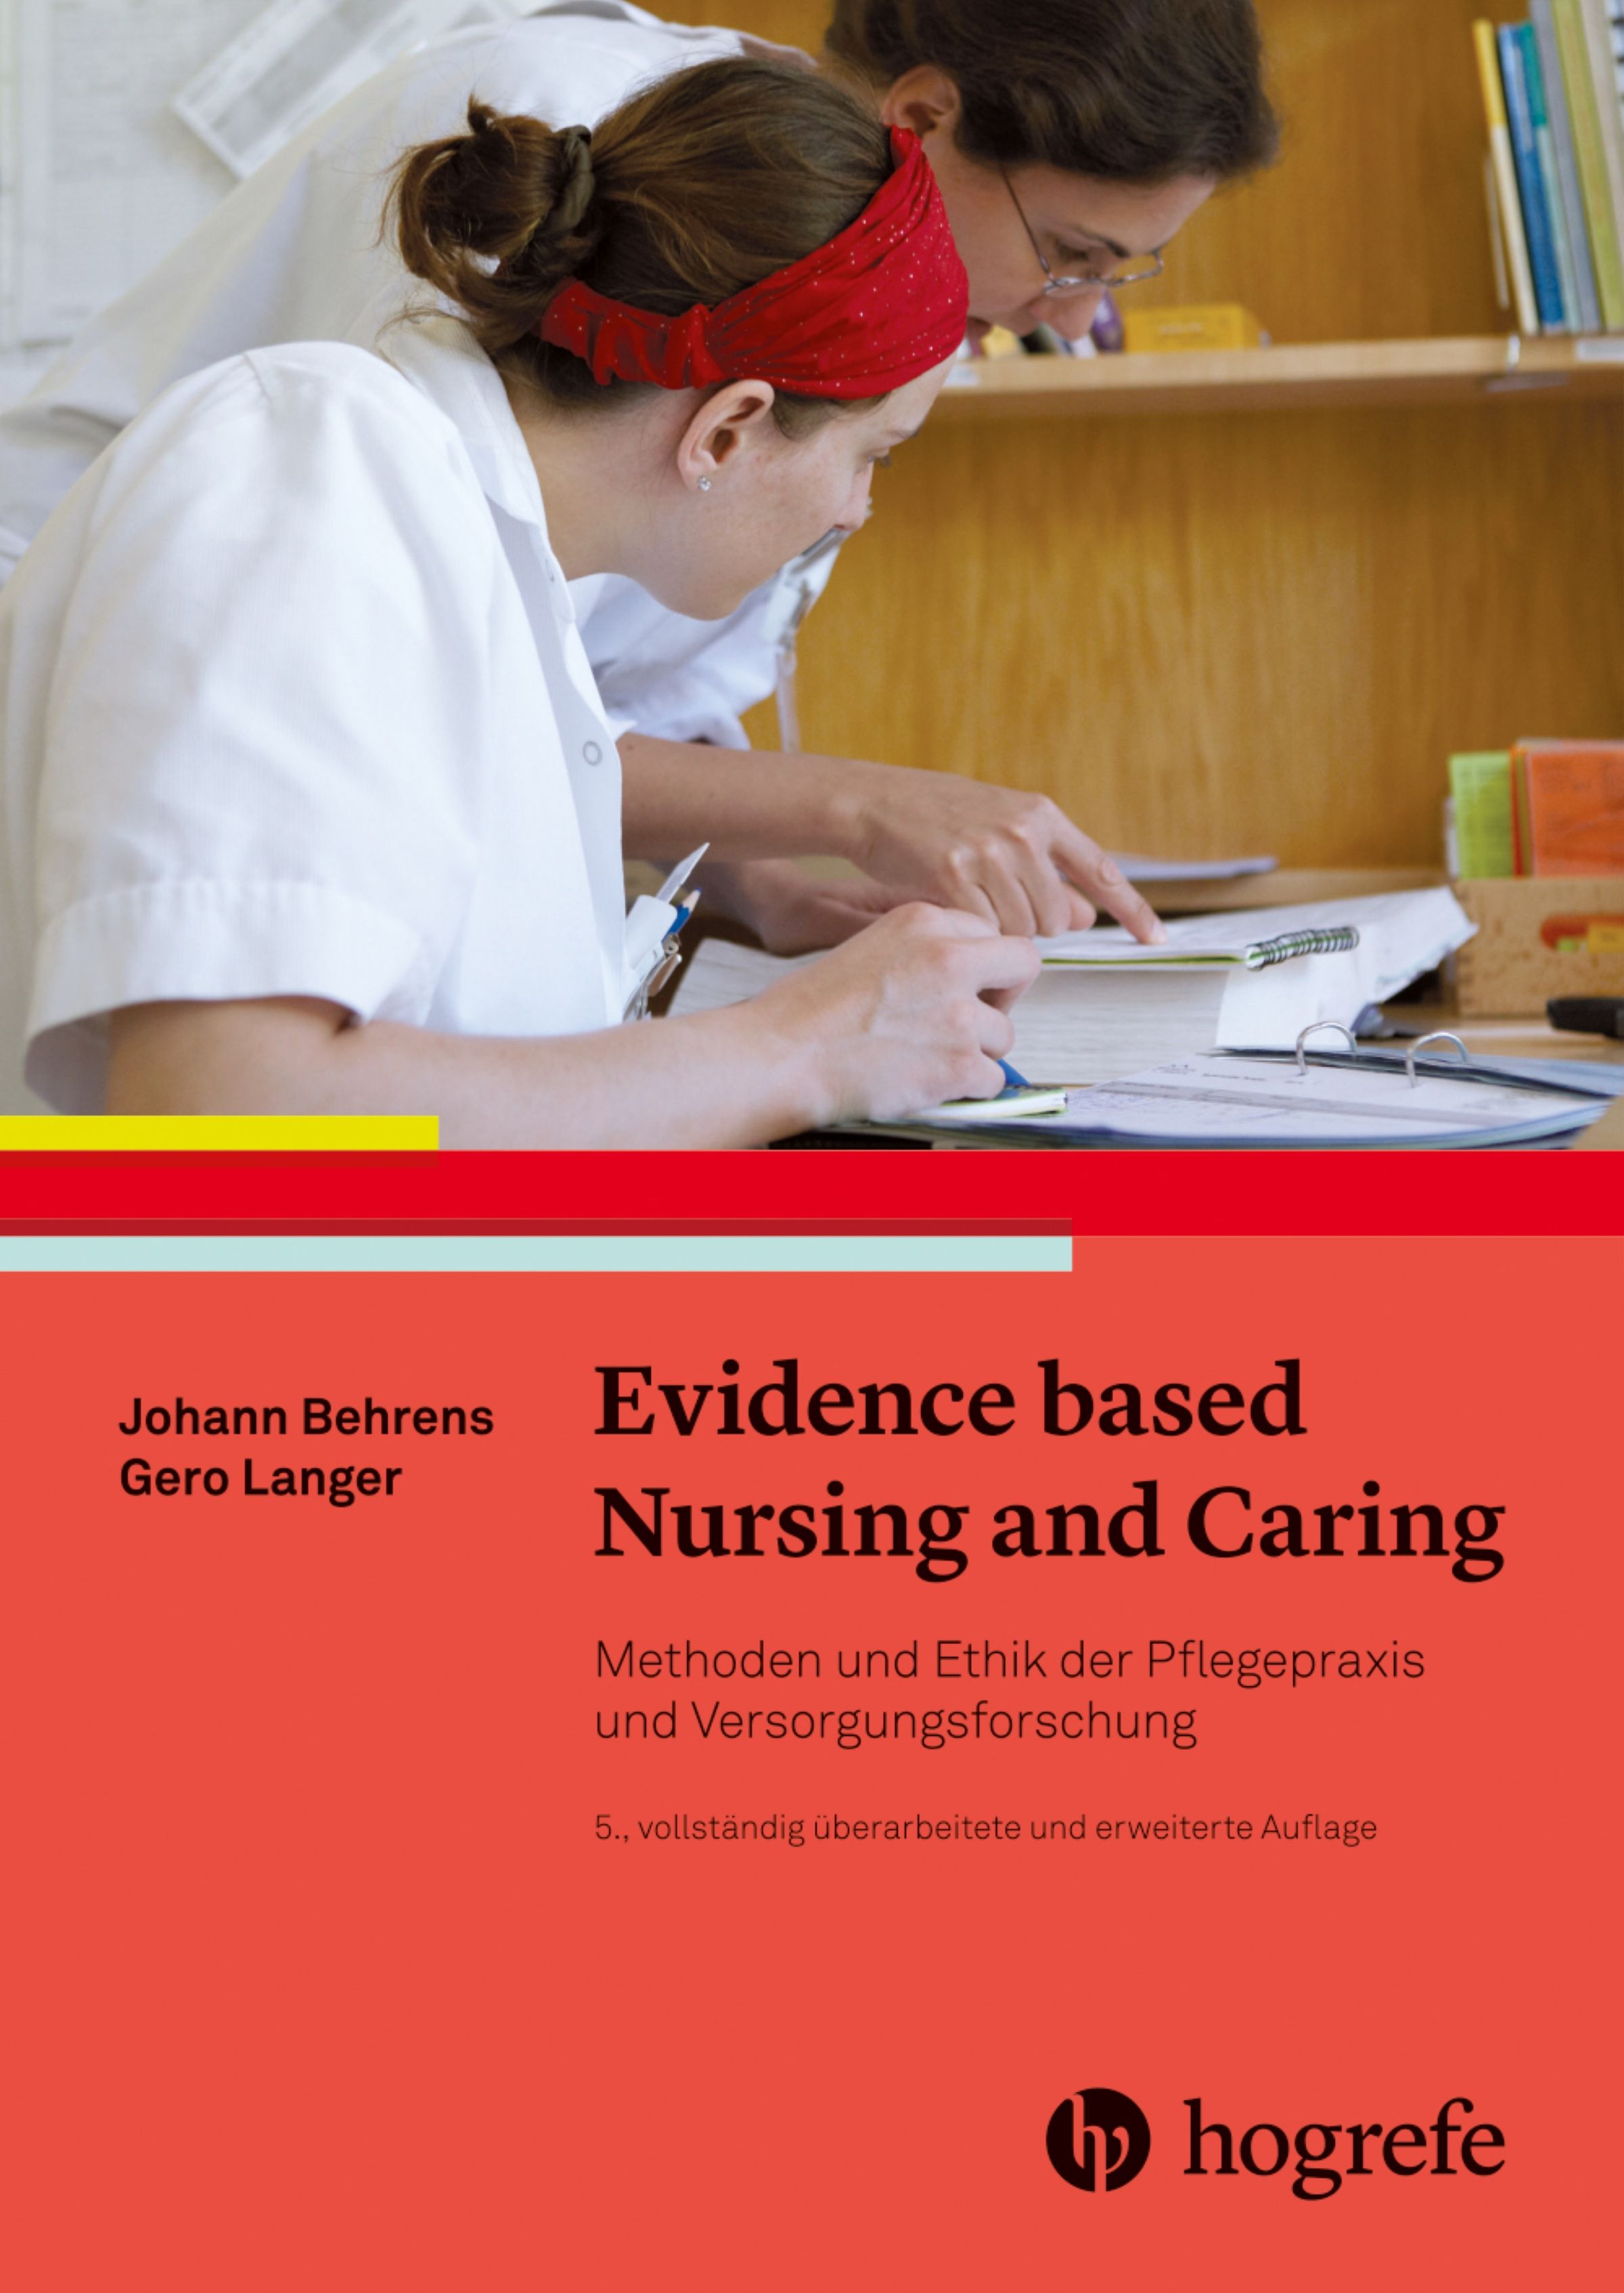 Evidence based Nursing and Caring